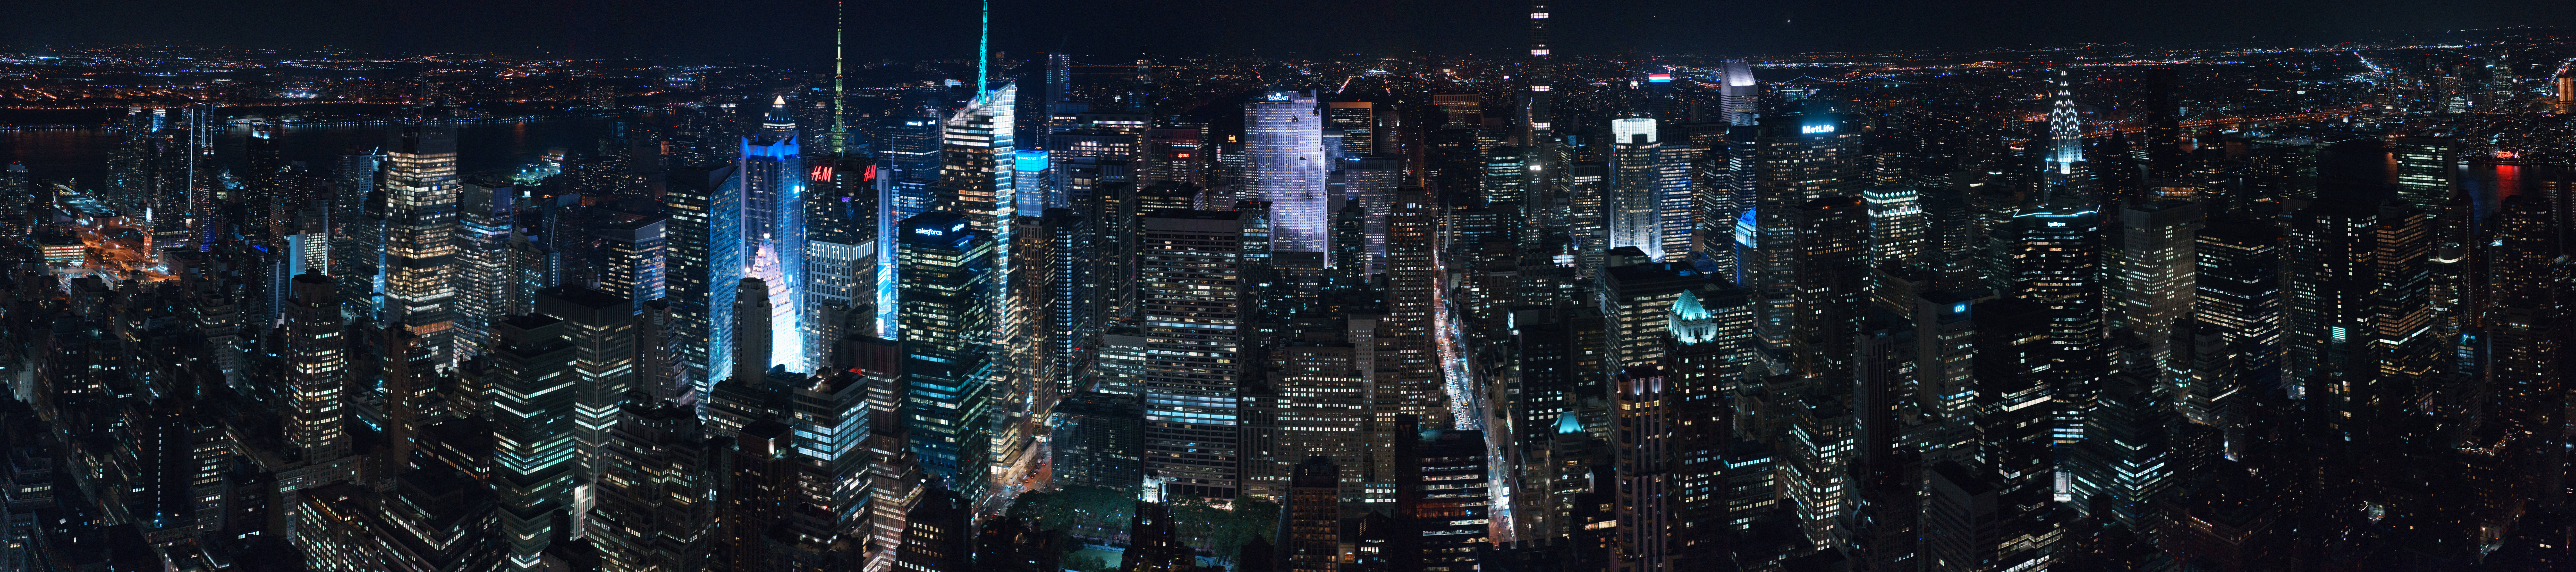 Empire State Building Nighttime Panorama Wallpaper